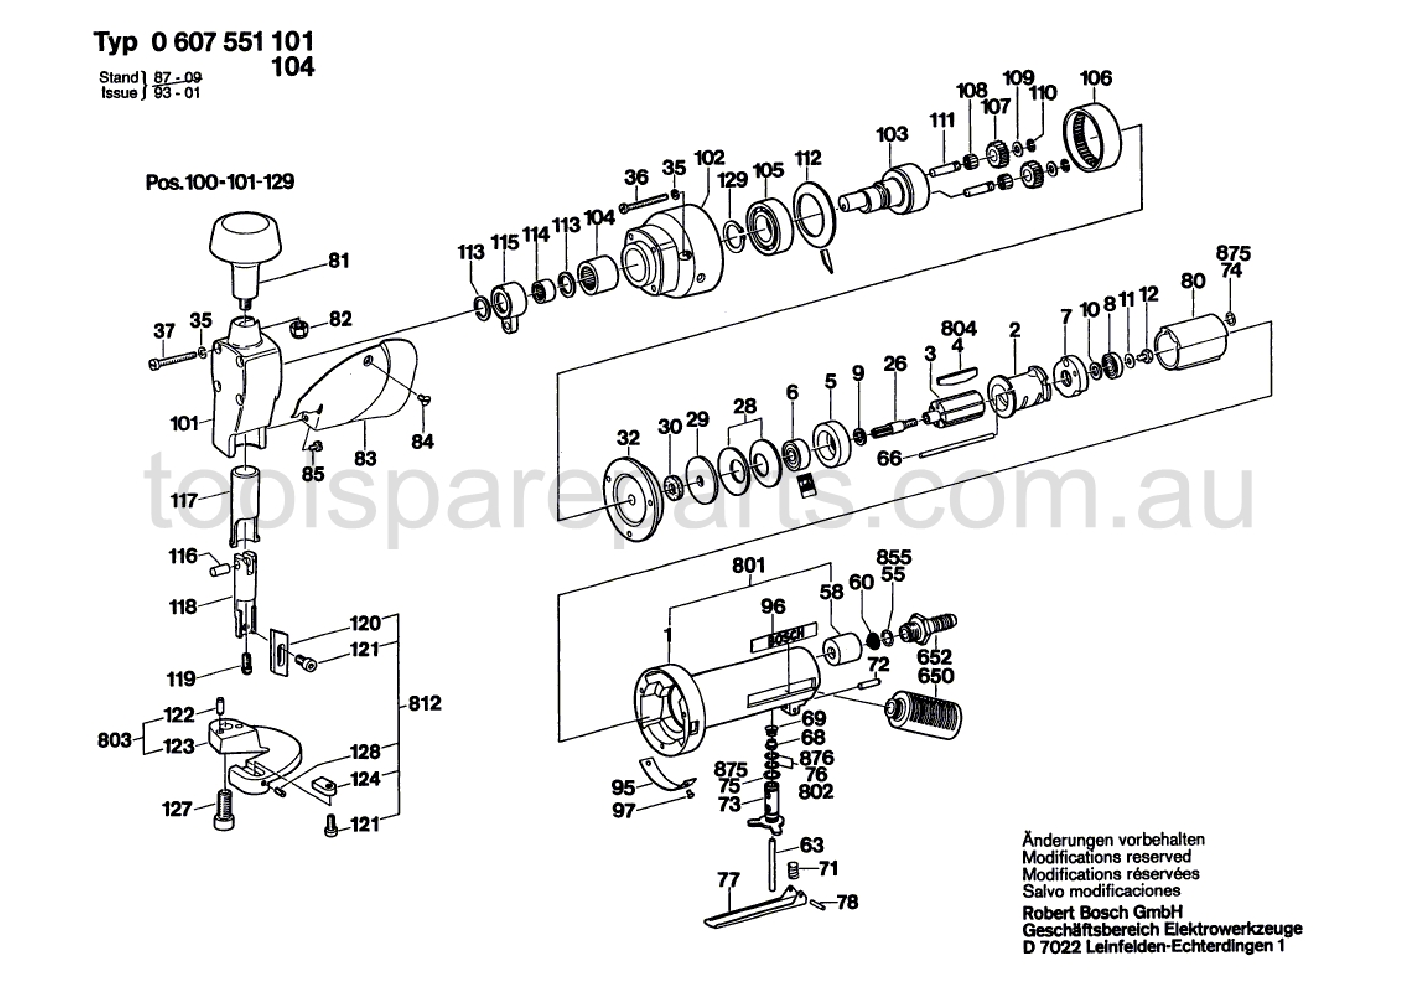 Bosch 370 WATT-SERIE 0607551101  Diagram 1